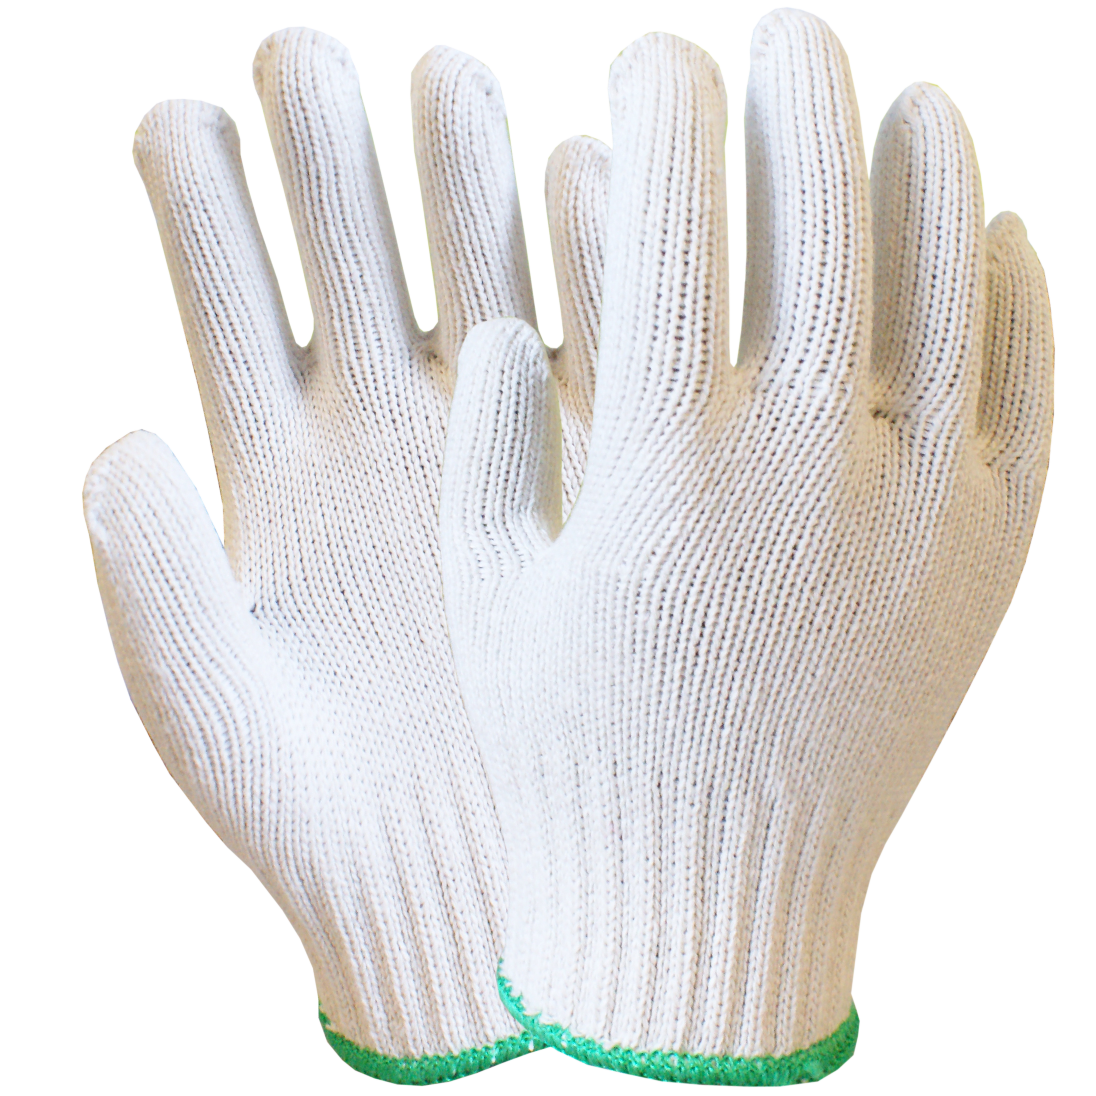 Pure cotton gloves